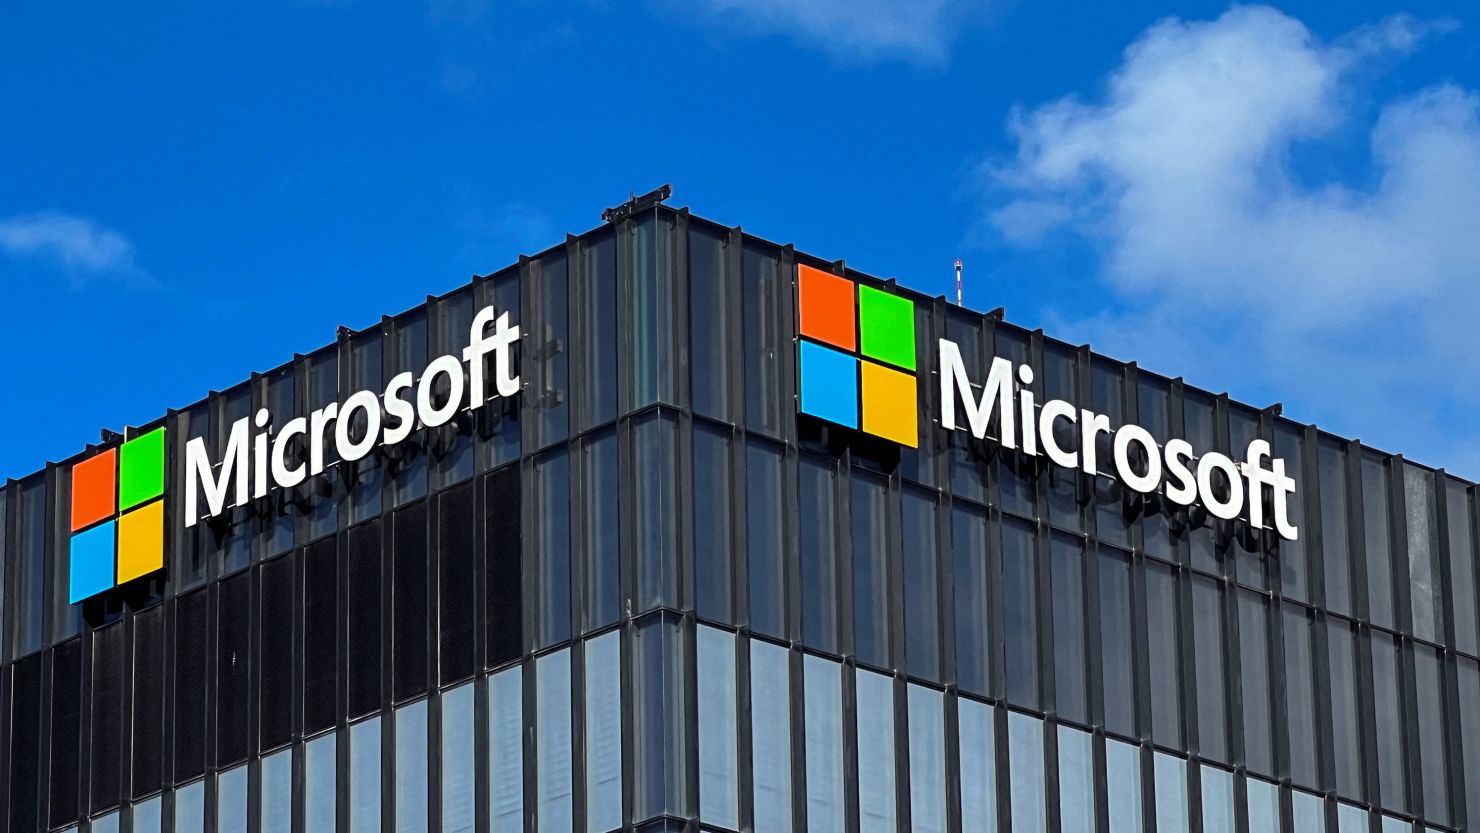 The logo of Microsoft is seen on the exterior of their offices in Herzliya, near Tel Aviv, Israel on December 27, 2022.